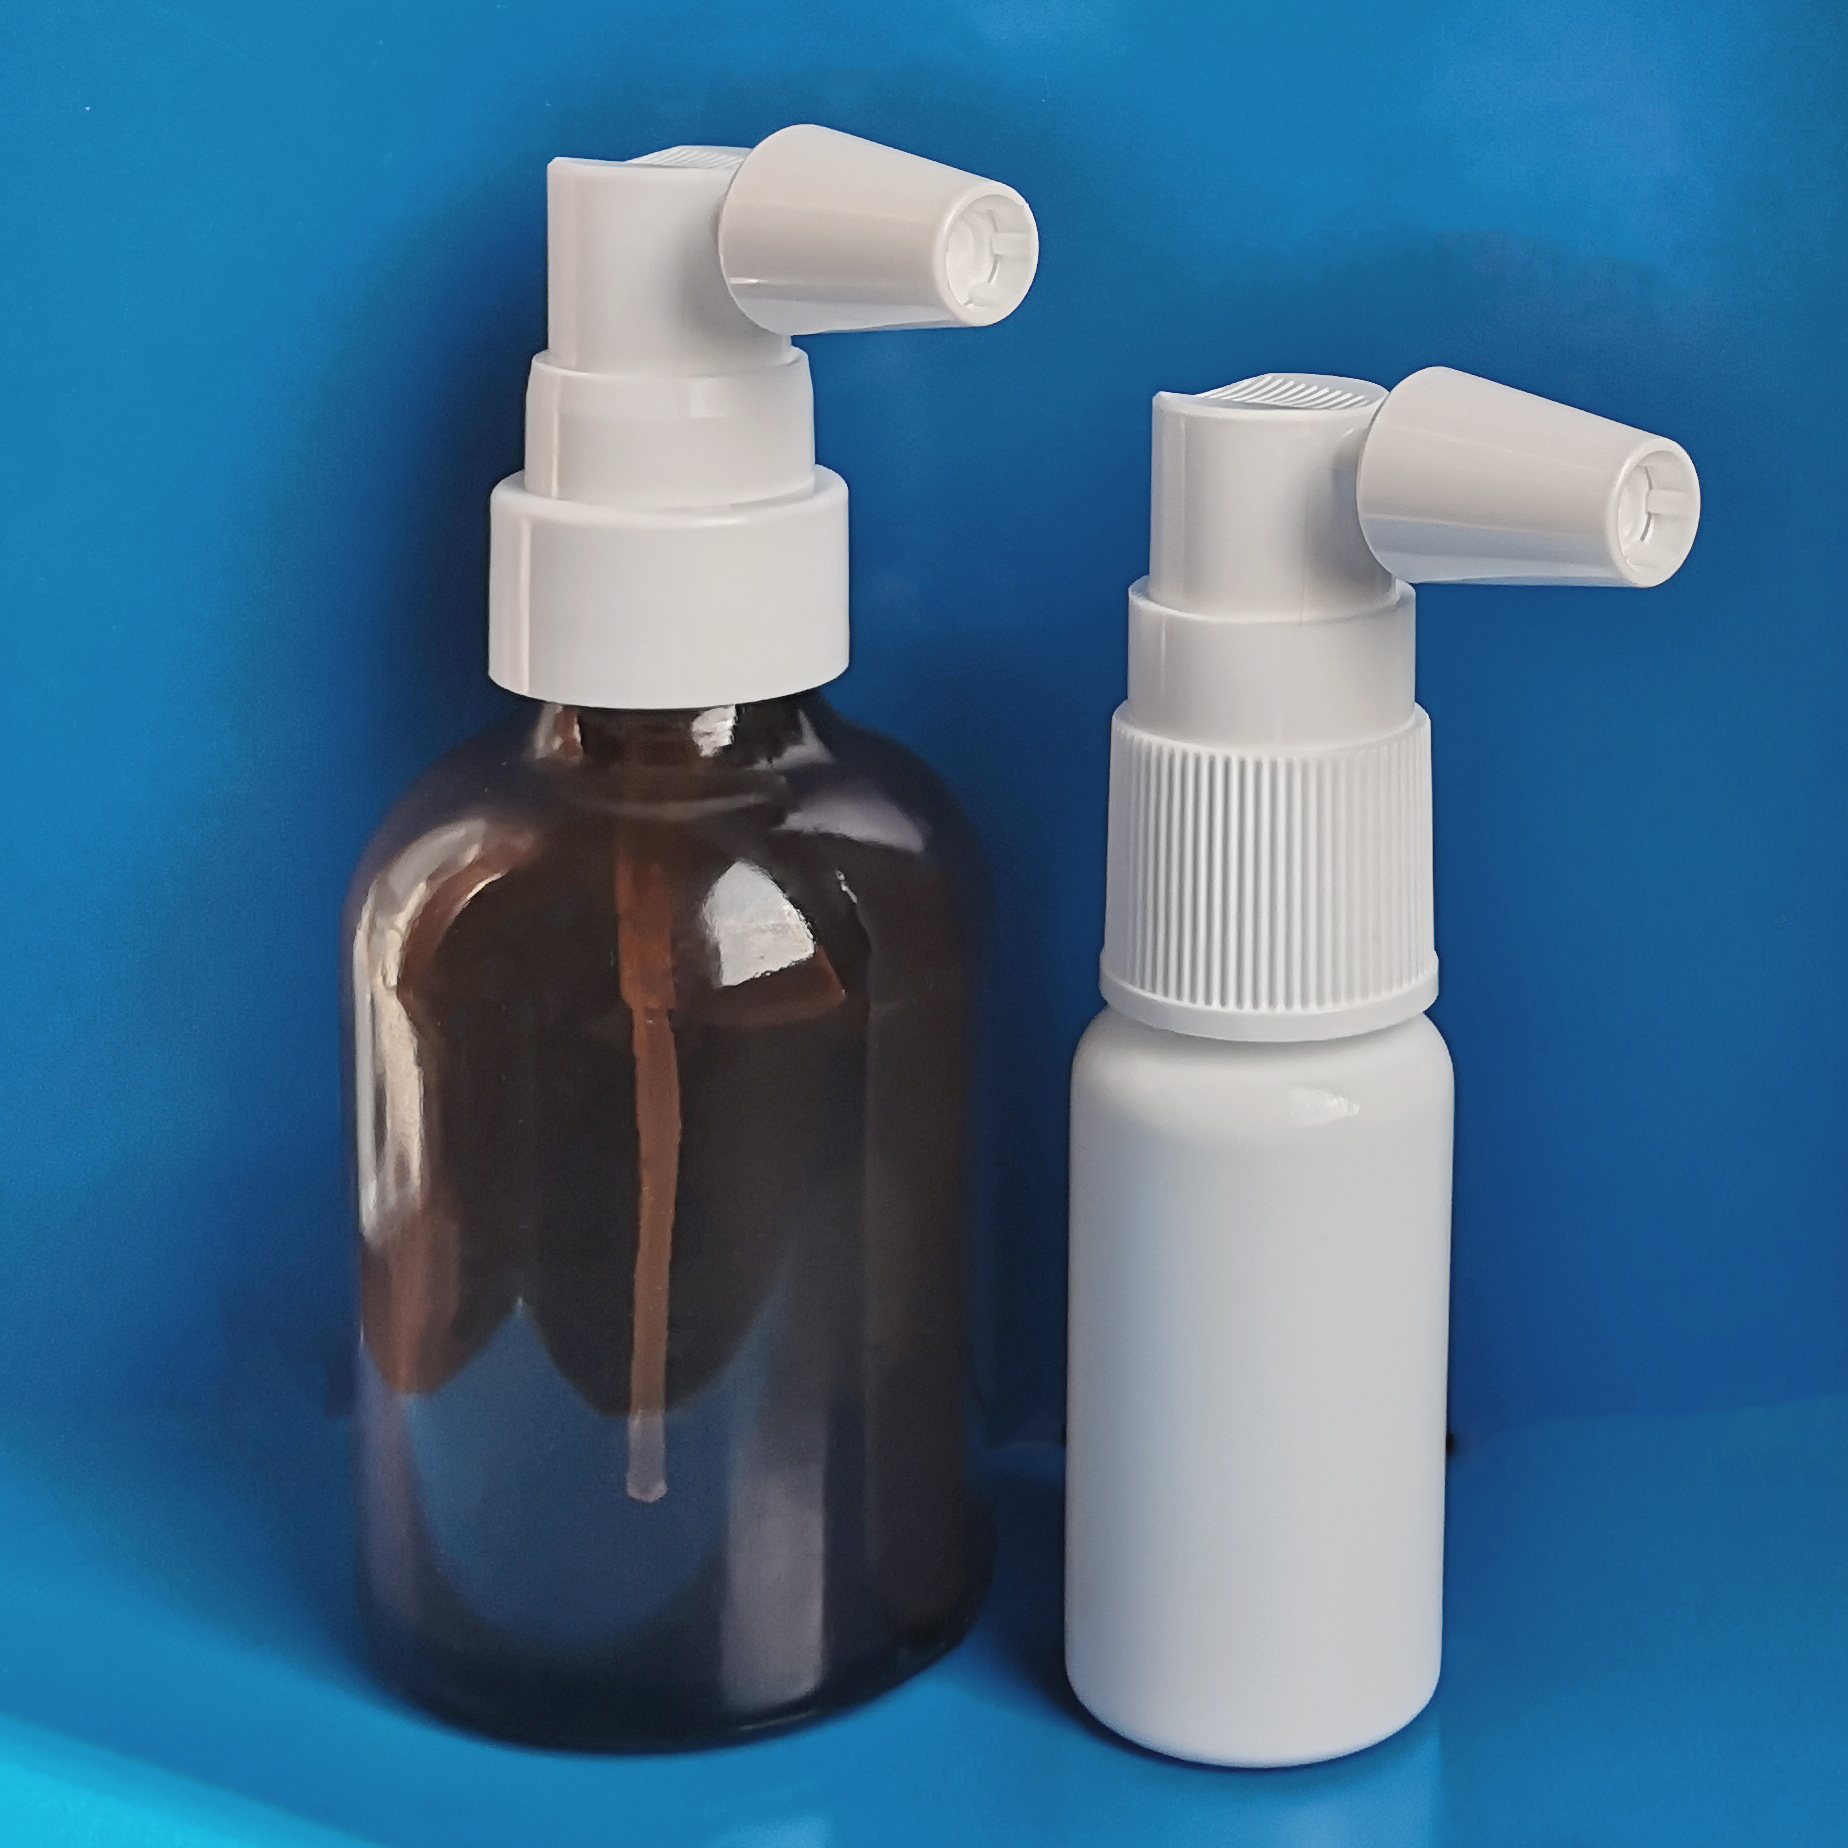 Metered dose ear spray, Auricular spray pumps